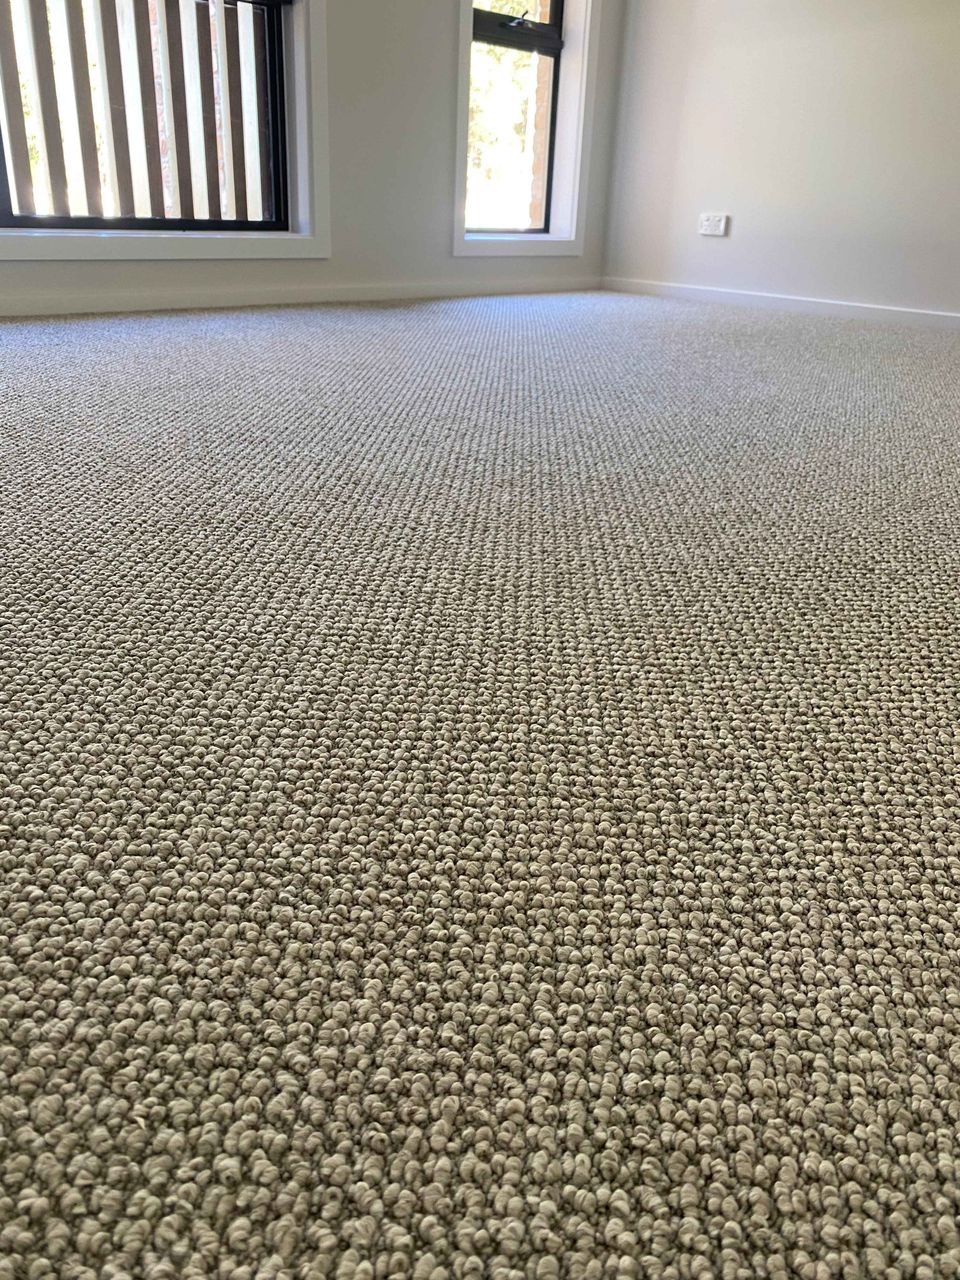 Port Macquarie Carpet One Floor & Home image